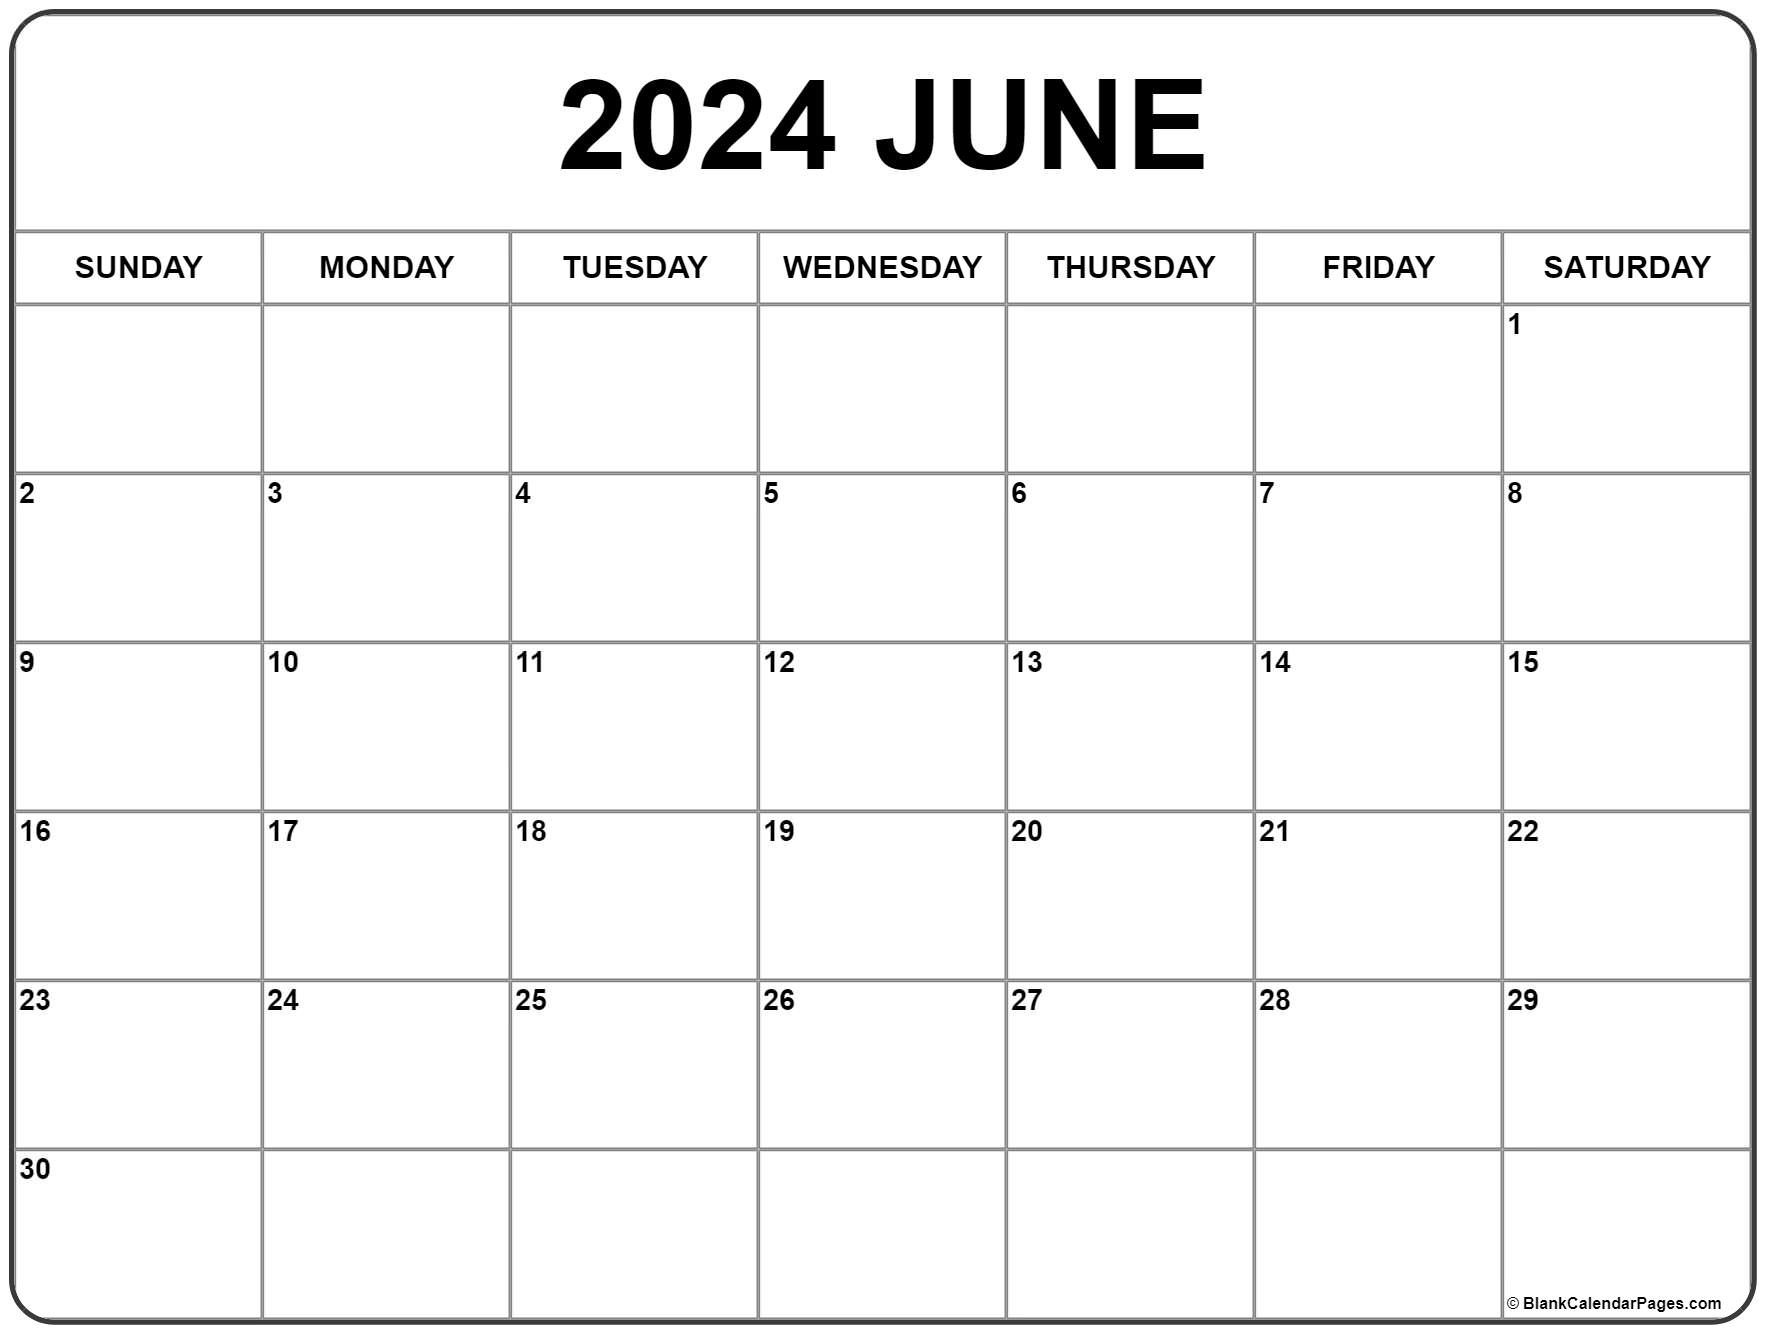 June 2024 Calendar | Free Printable Calendar inside Free Printable Blank Calendar June 2024